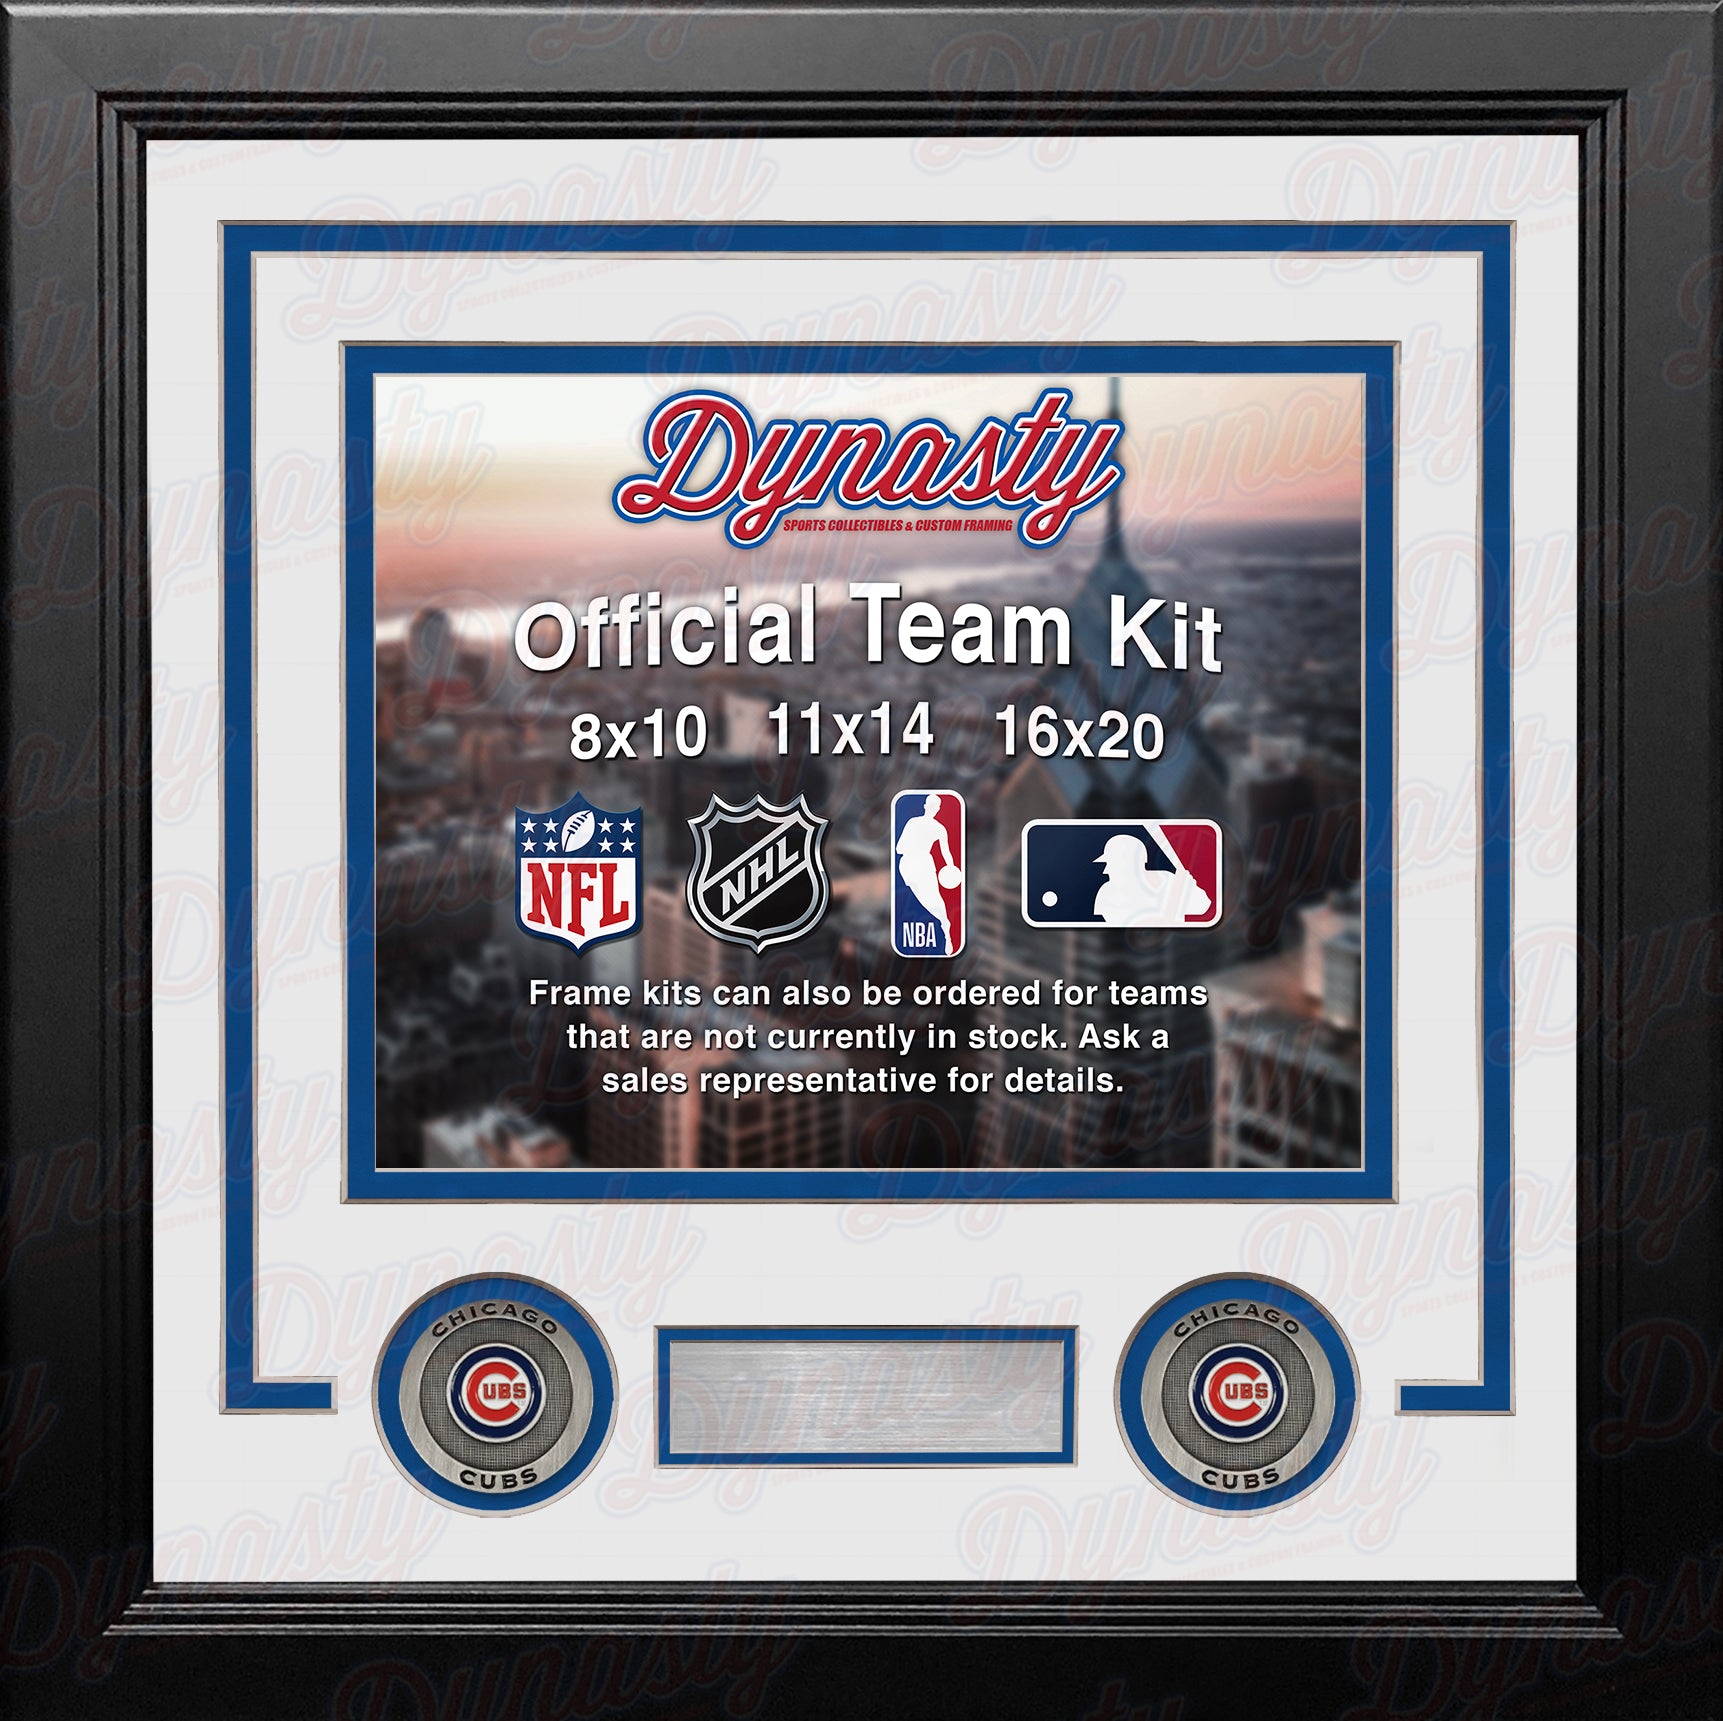 MLB Baseball Photo Picture Frame Kit - Chicago Cubs (White Matting, Blue Trim) - Dynasty Sports & Framing 